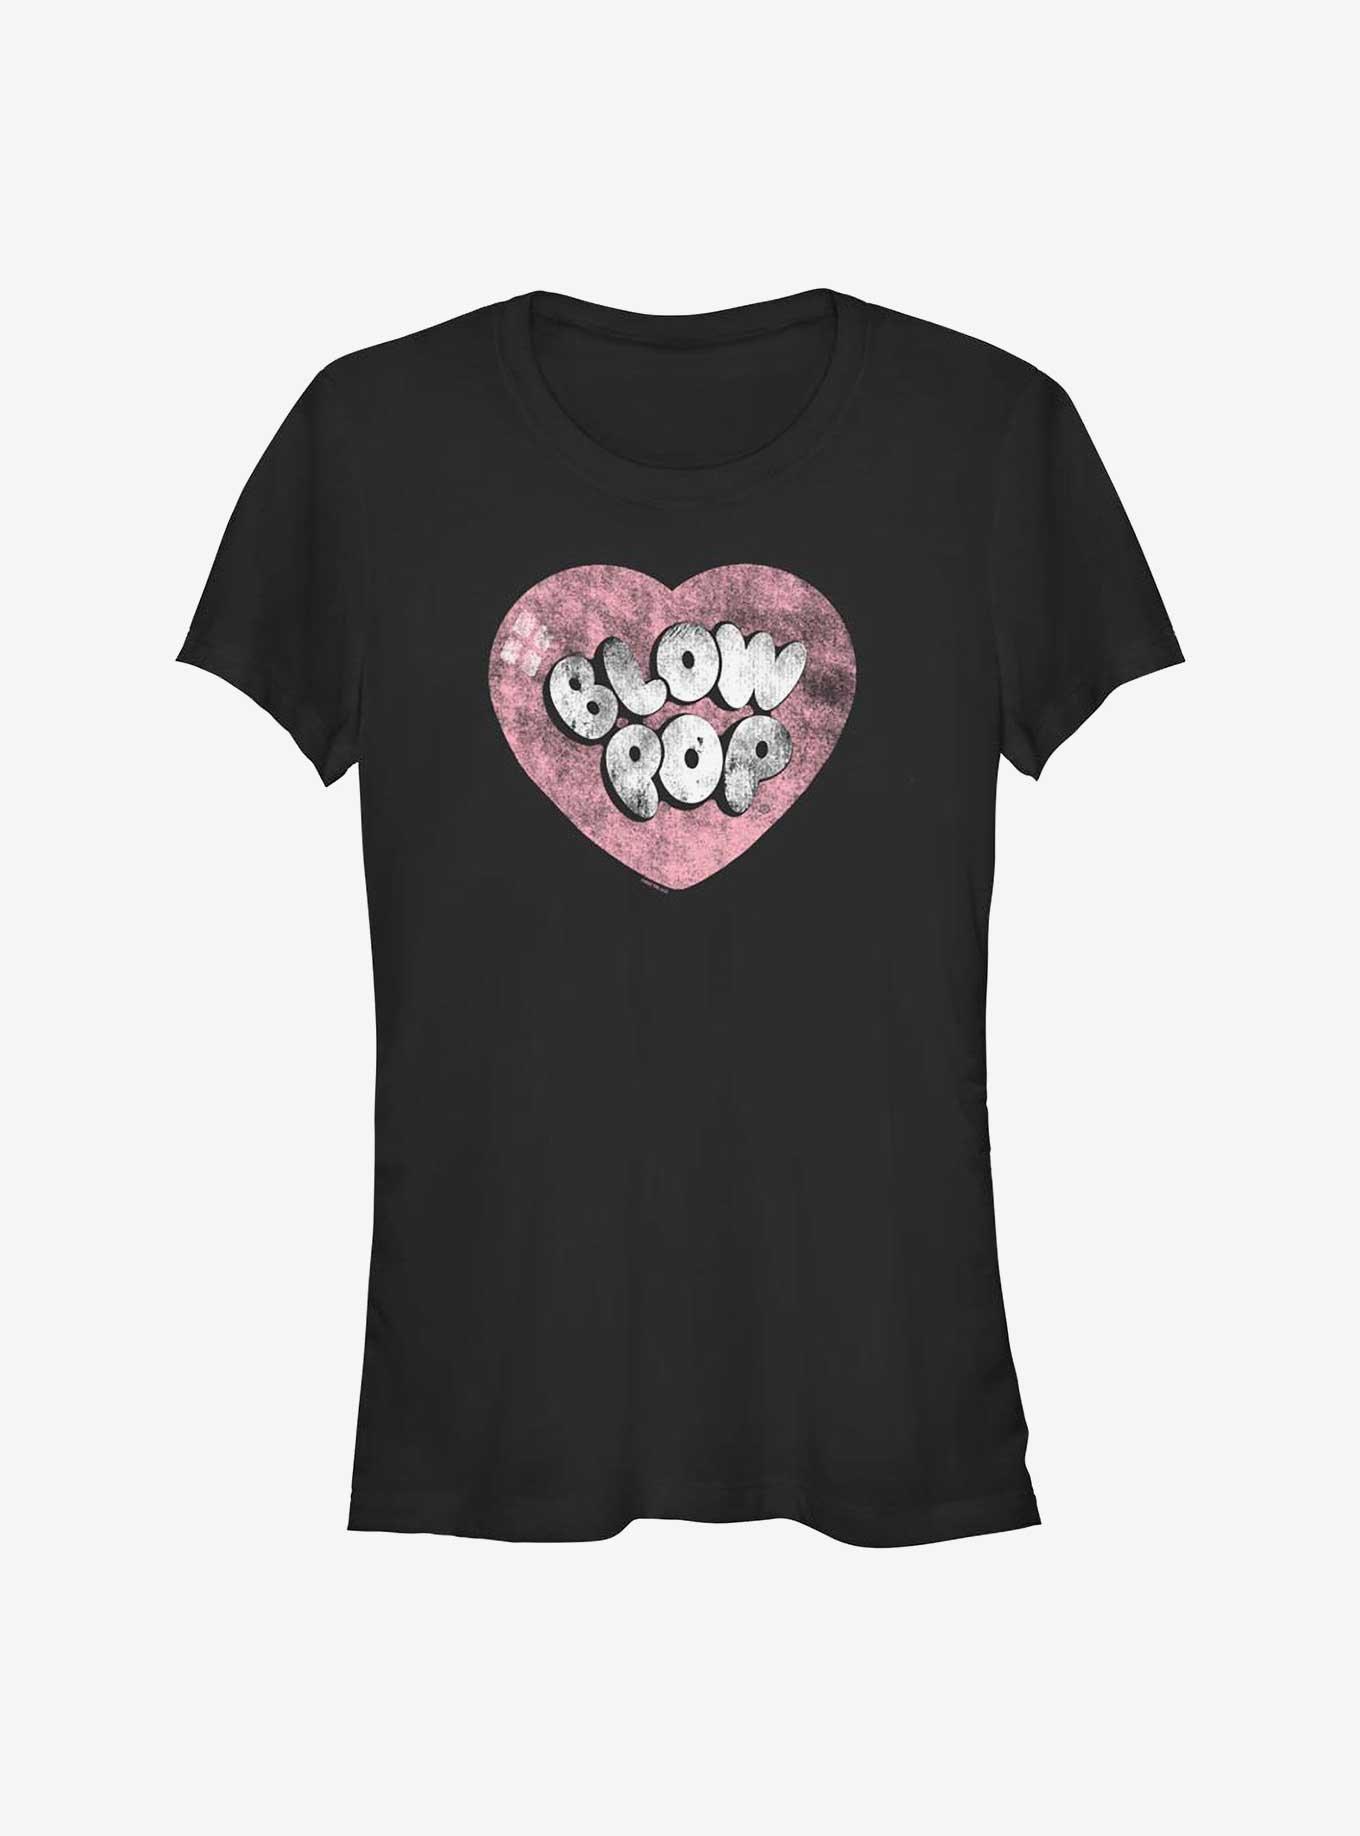 Tootsie Roll Blow Pop Heart Girls T-Shirt, BLACK, hi-res